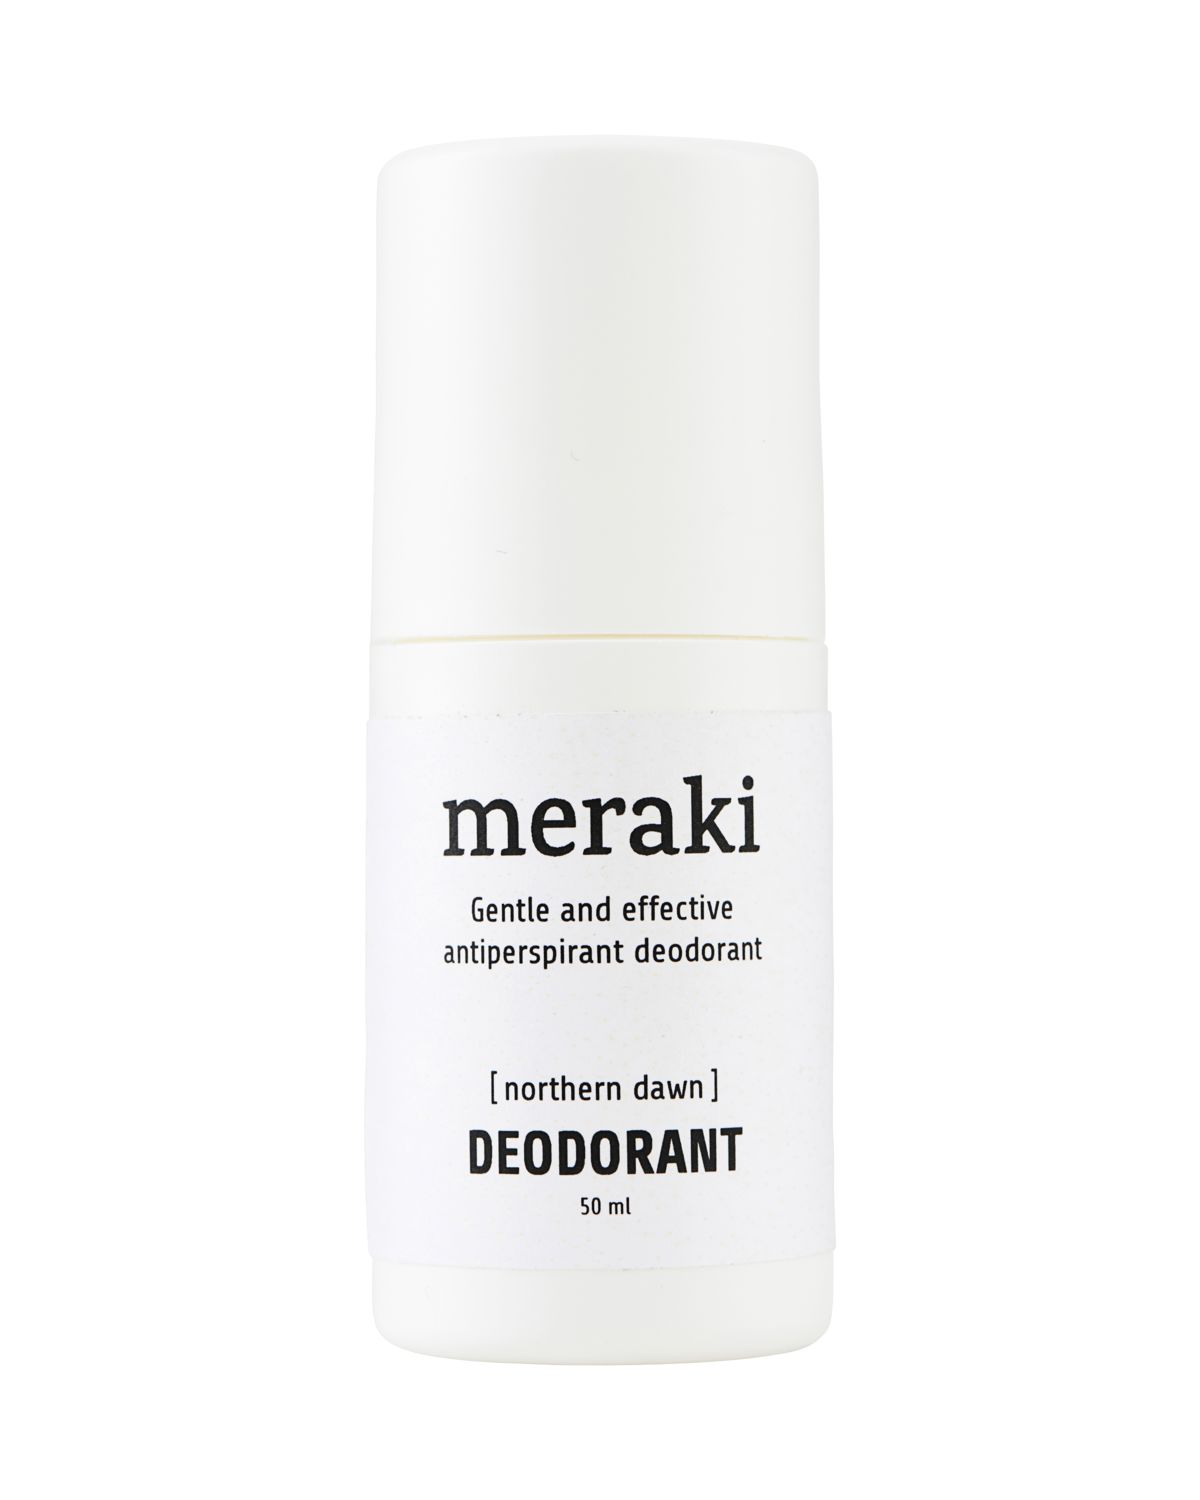 Meraki Deodorant, Northern dawn